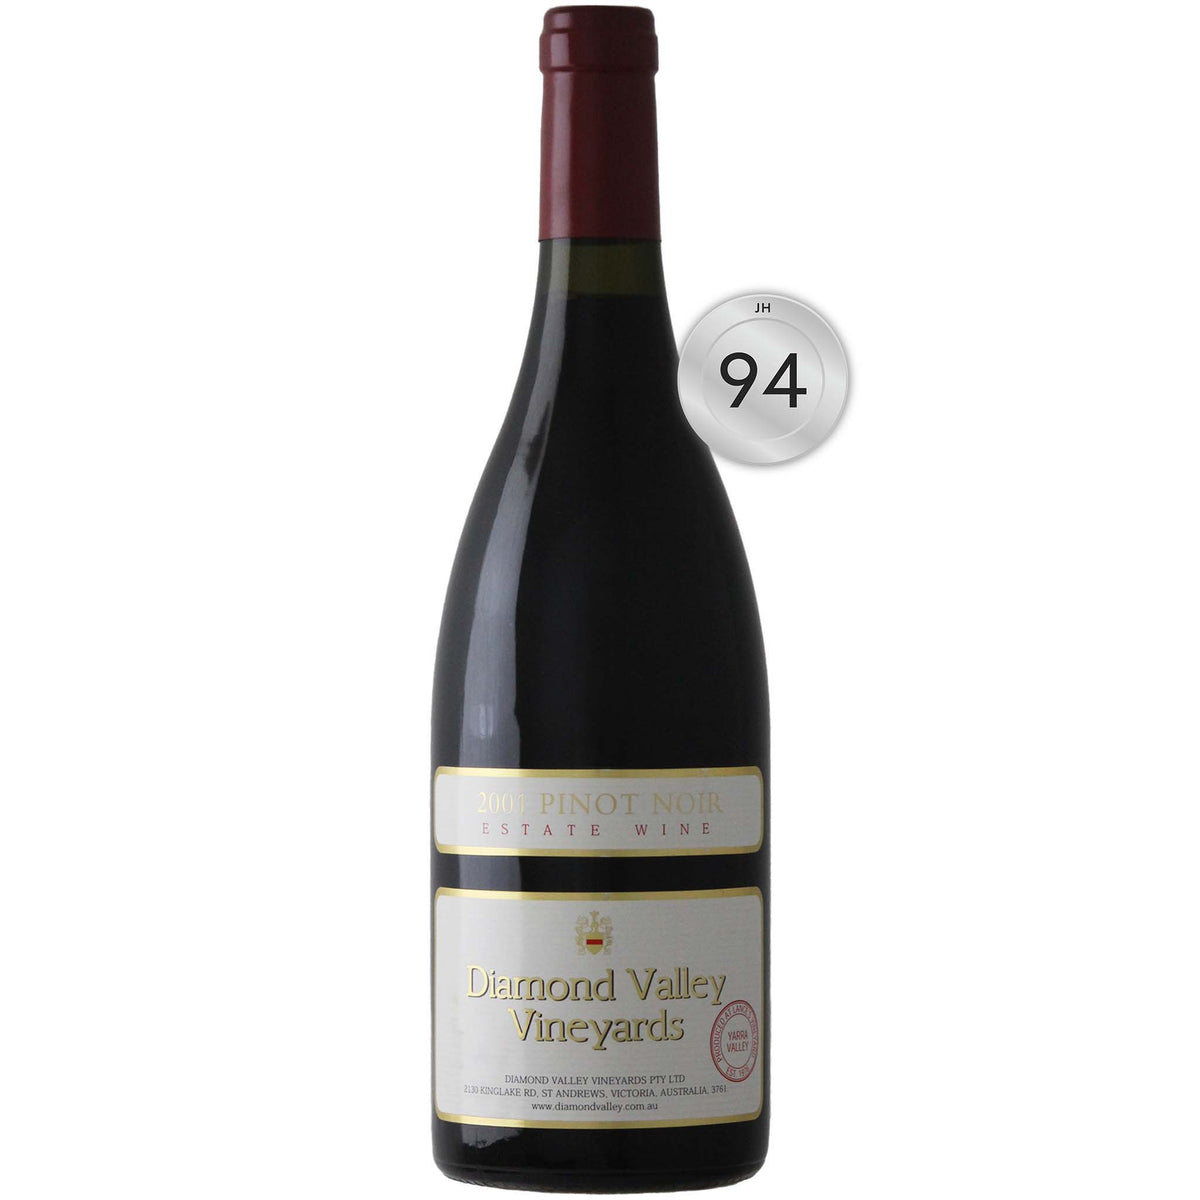 Diamond-Valley-Vineyards-White-Label-Pinot-Noir-2001